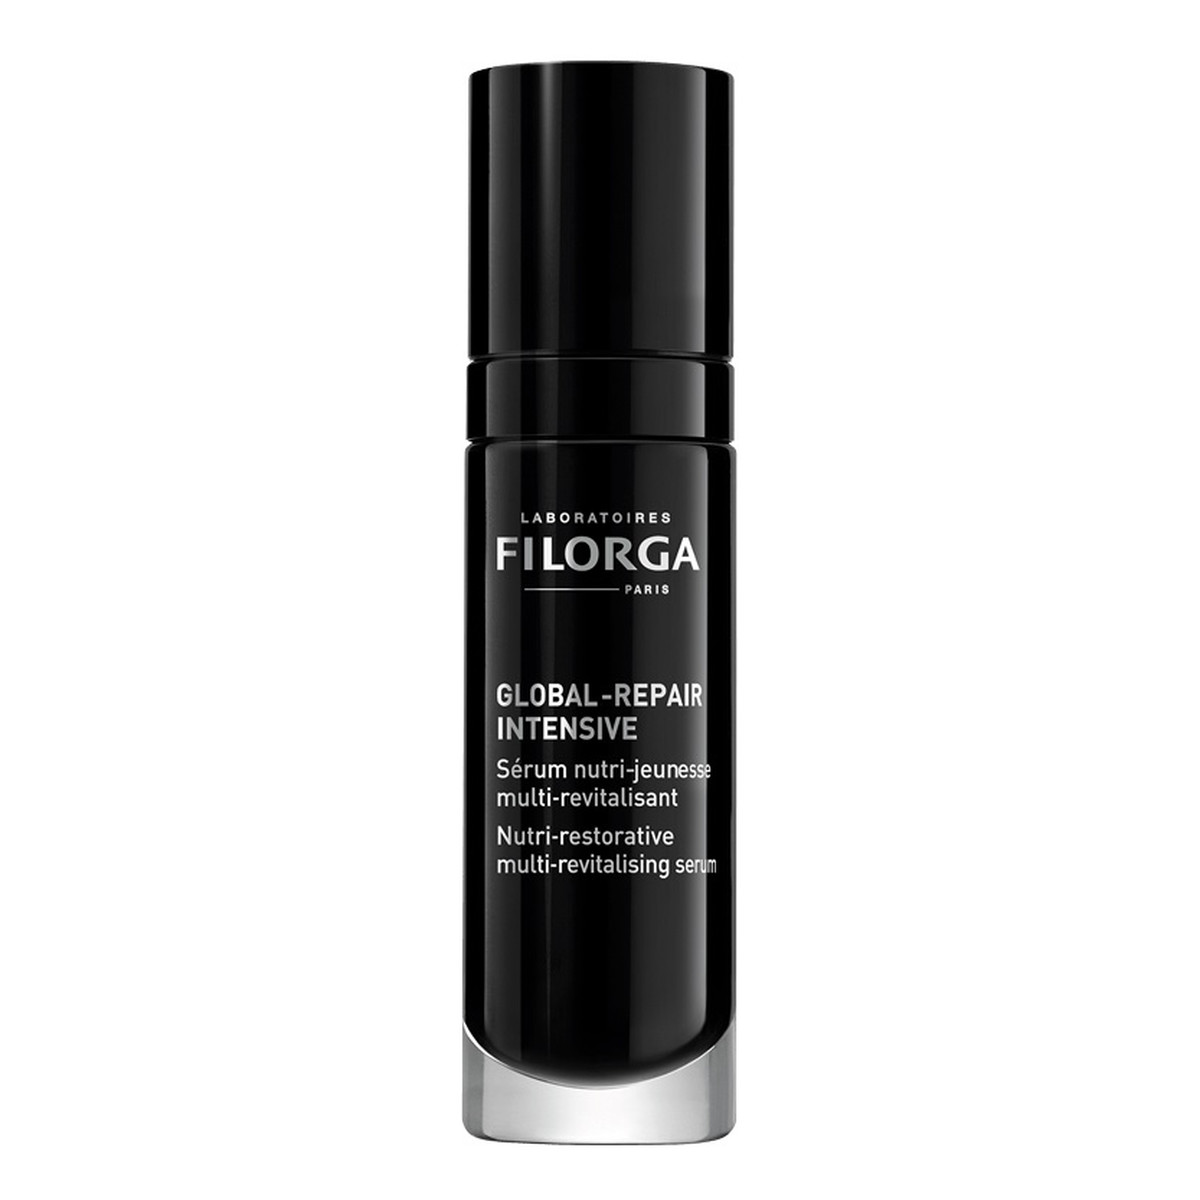 Filorga Global-repair intensive intensywne multi-rewitalizujące serum odmładzające do twarzy 30ml